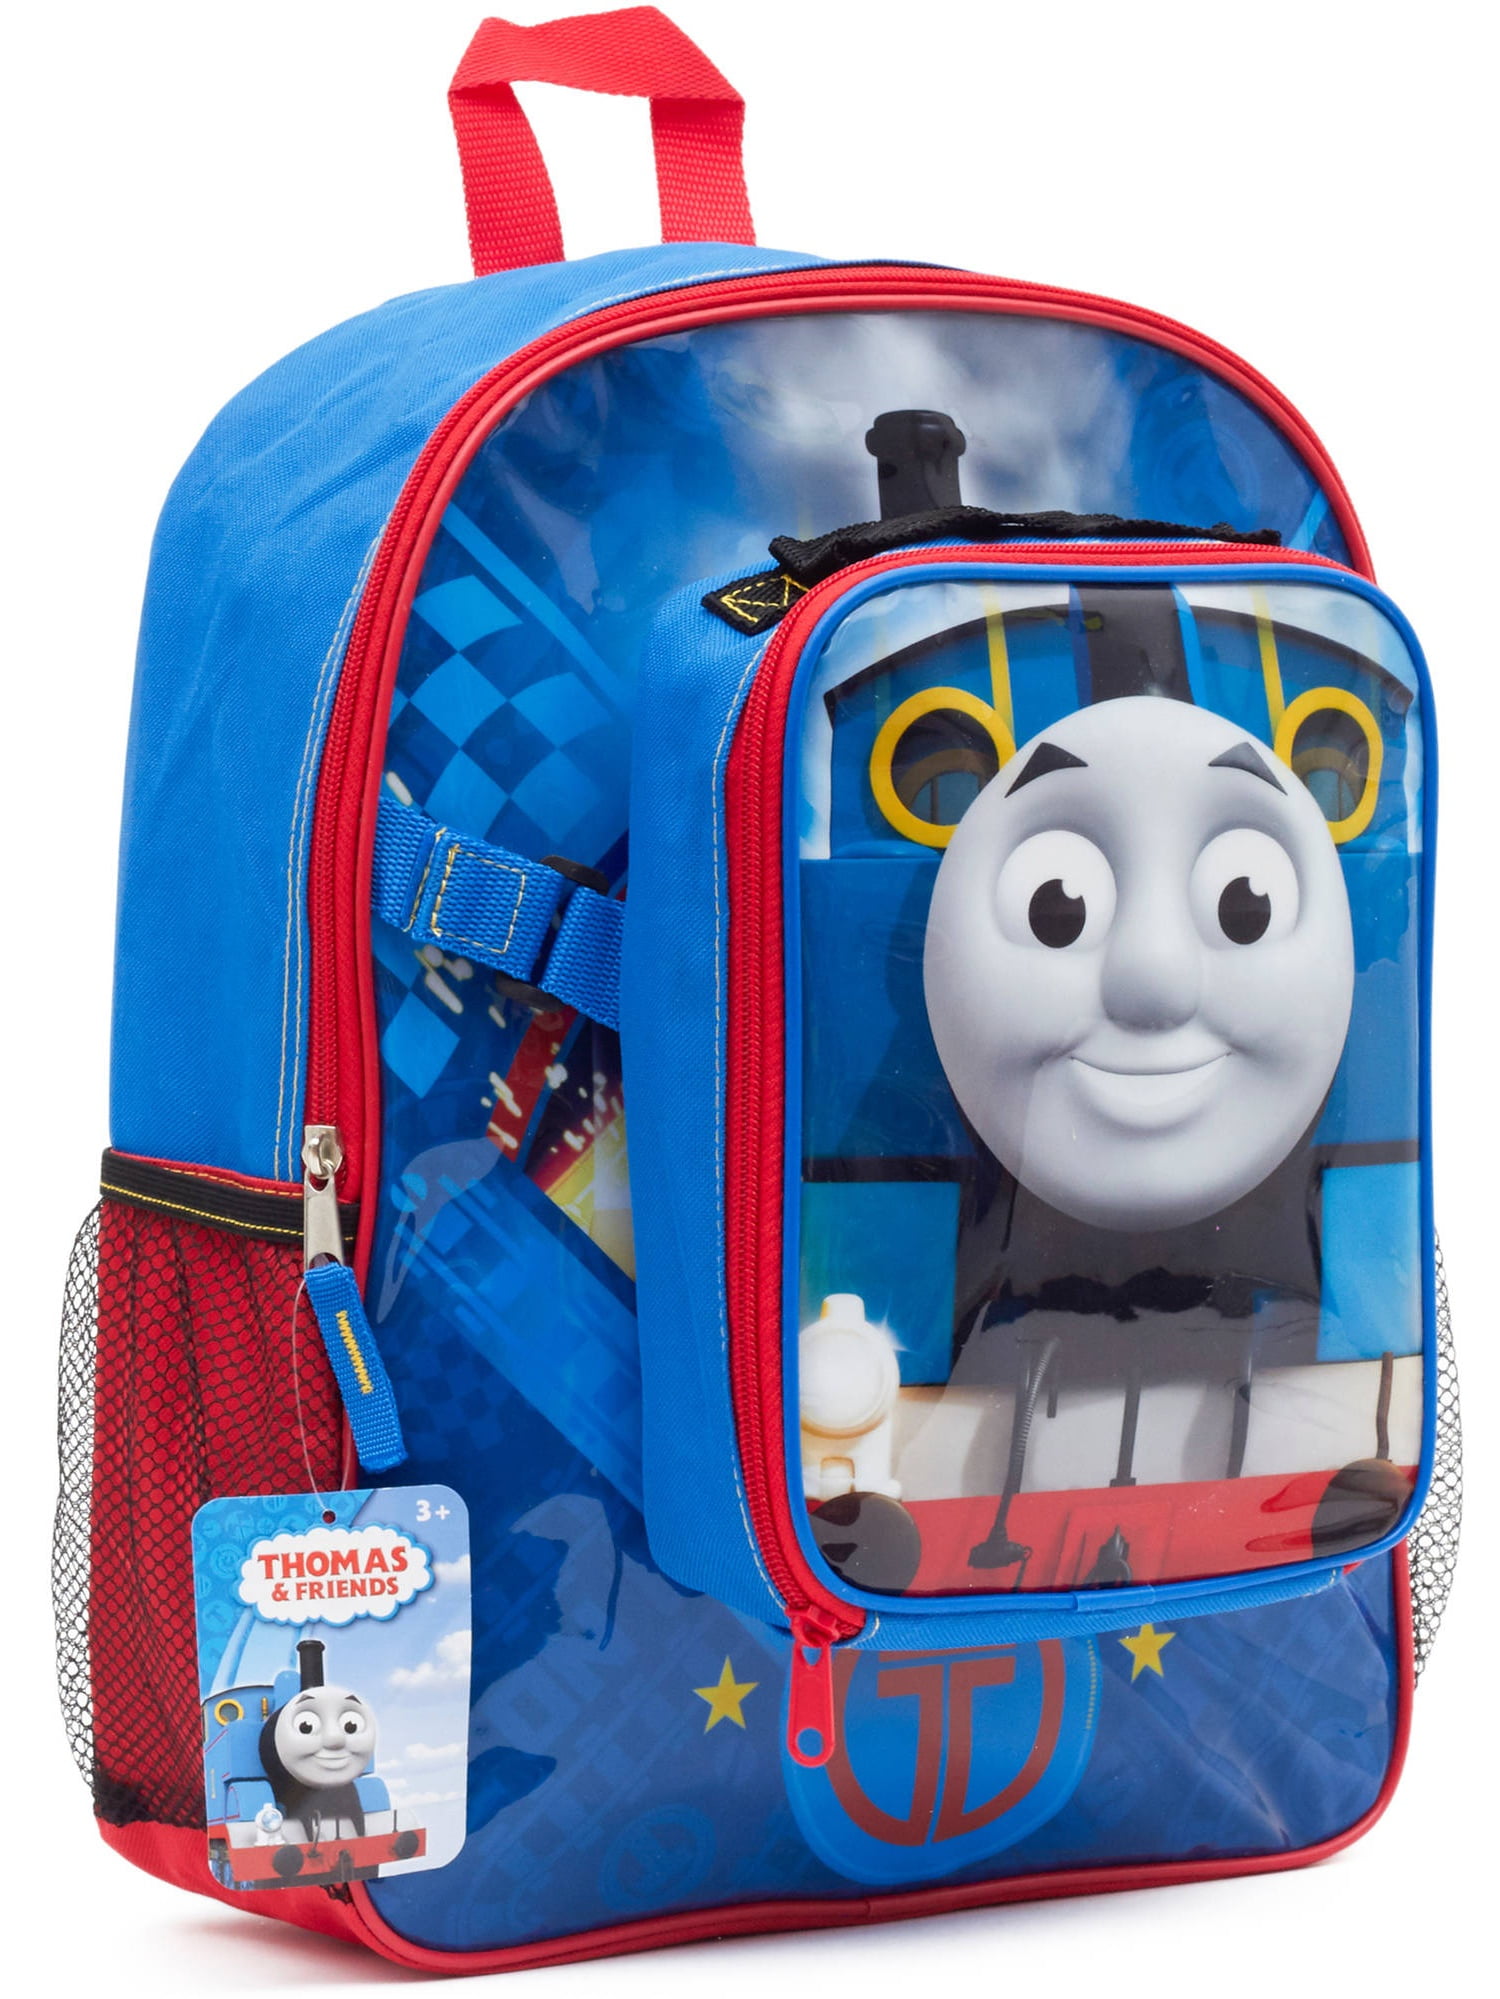 THOMAS THE TANK ENGINE Backpack Kids School Travel Bag Thomas & Friends Rucksack 